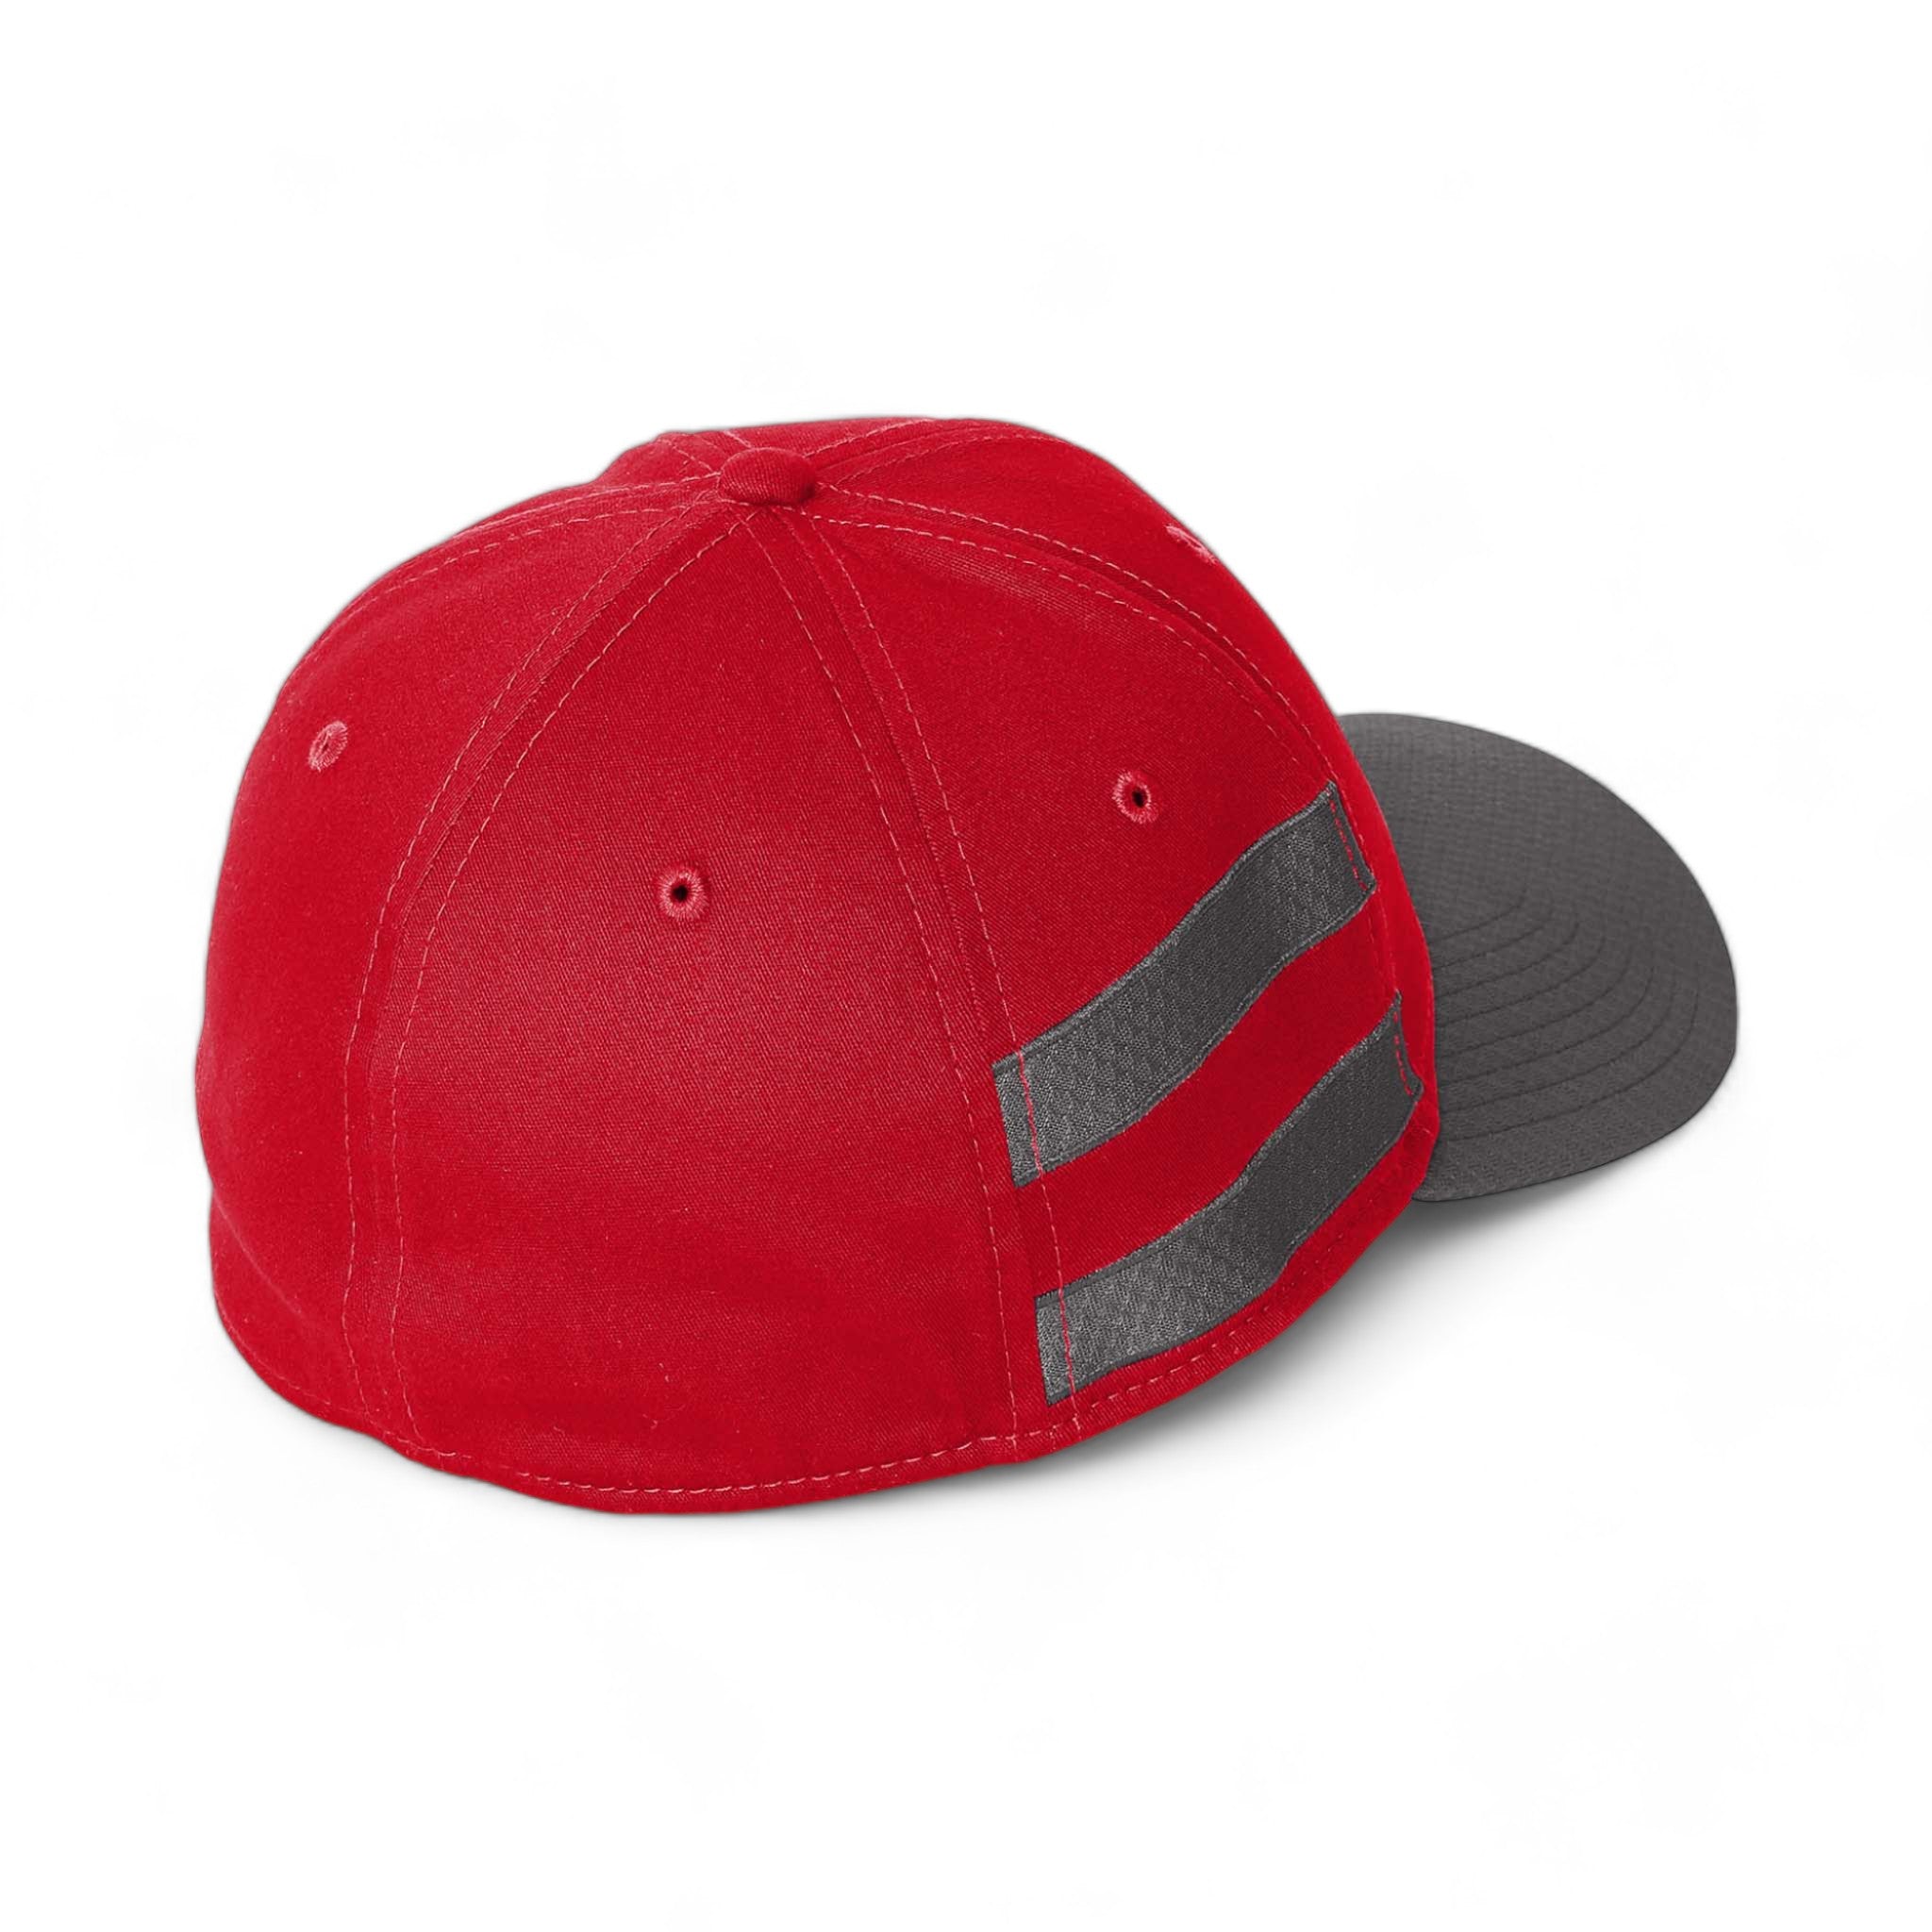 Back view of New Era NE1122 custom hat in scarlet and graphite